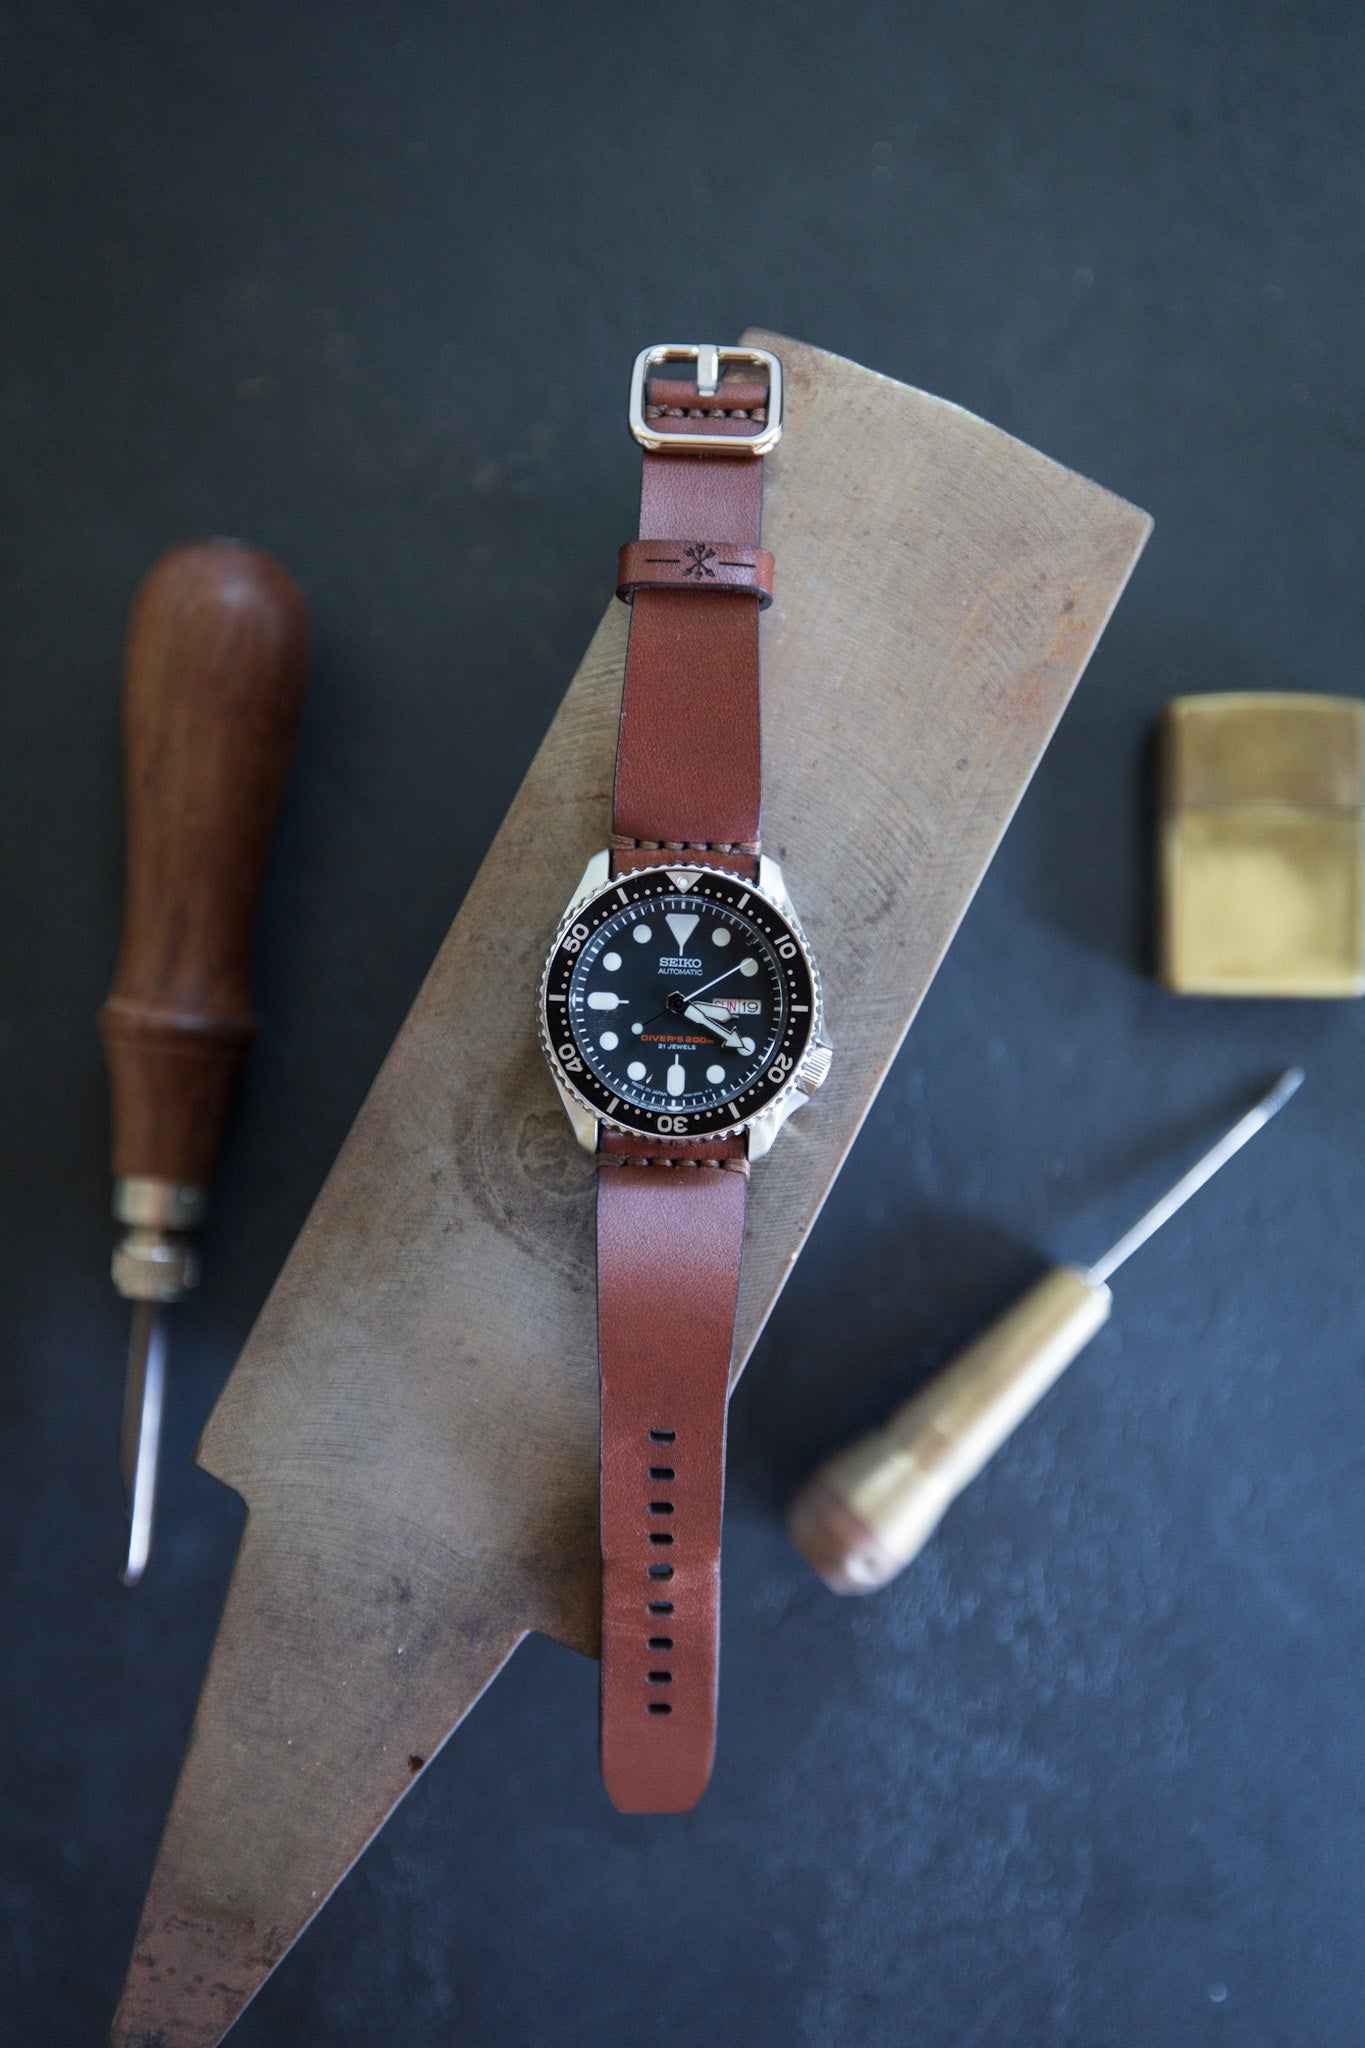 Leather Simple Watch Strap - Medium Brown